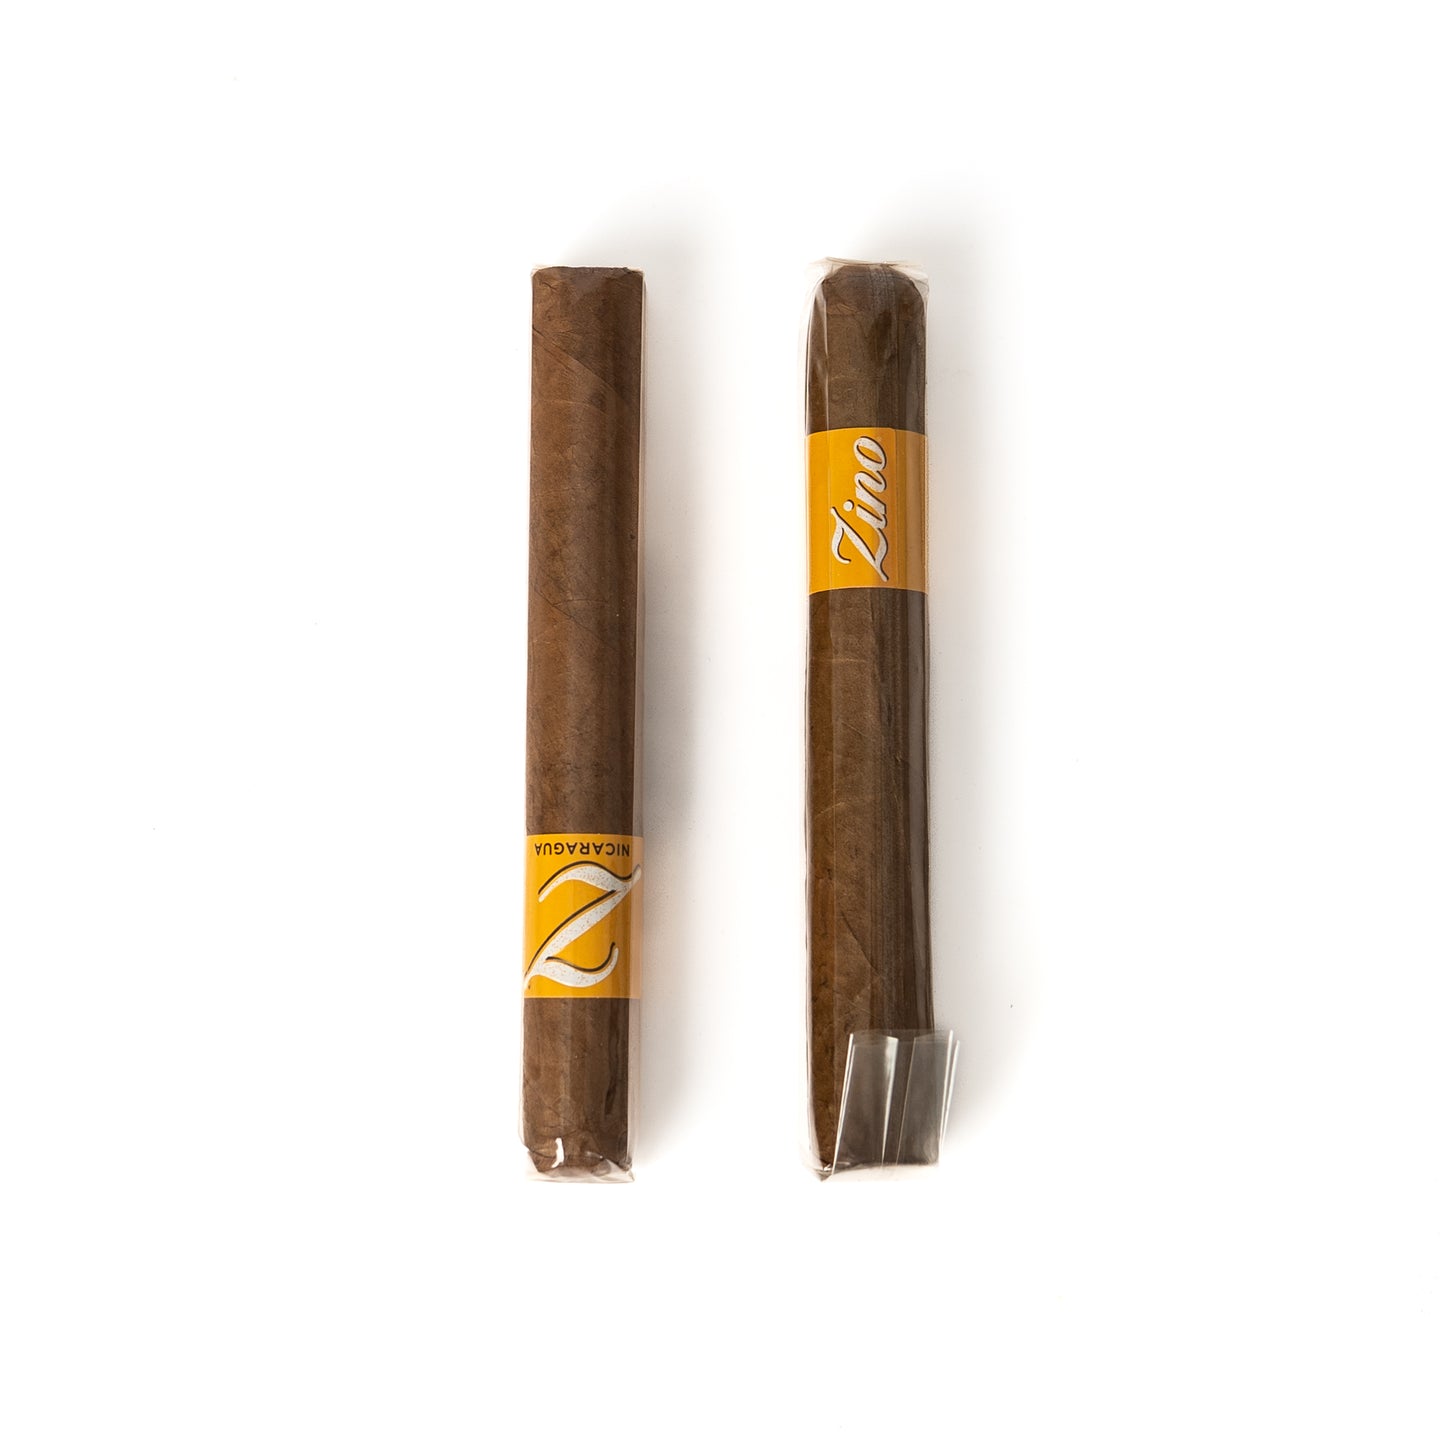 Zino Nicaragua Toro Cigar